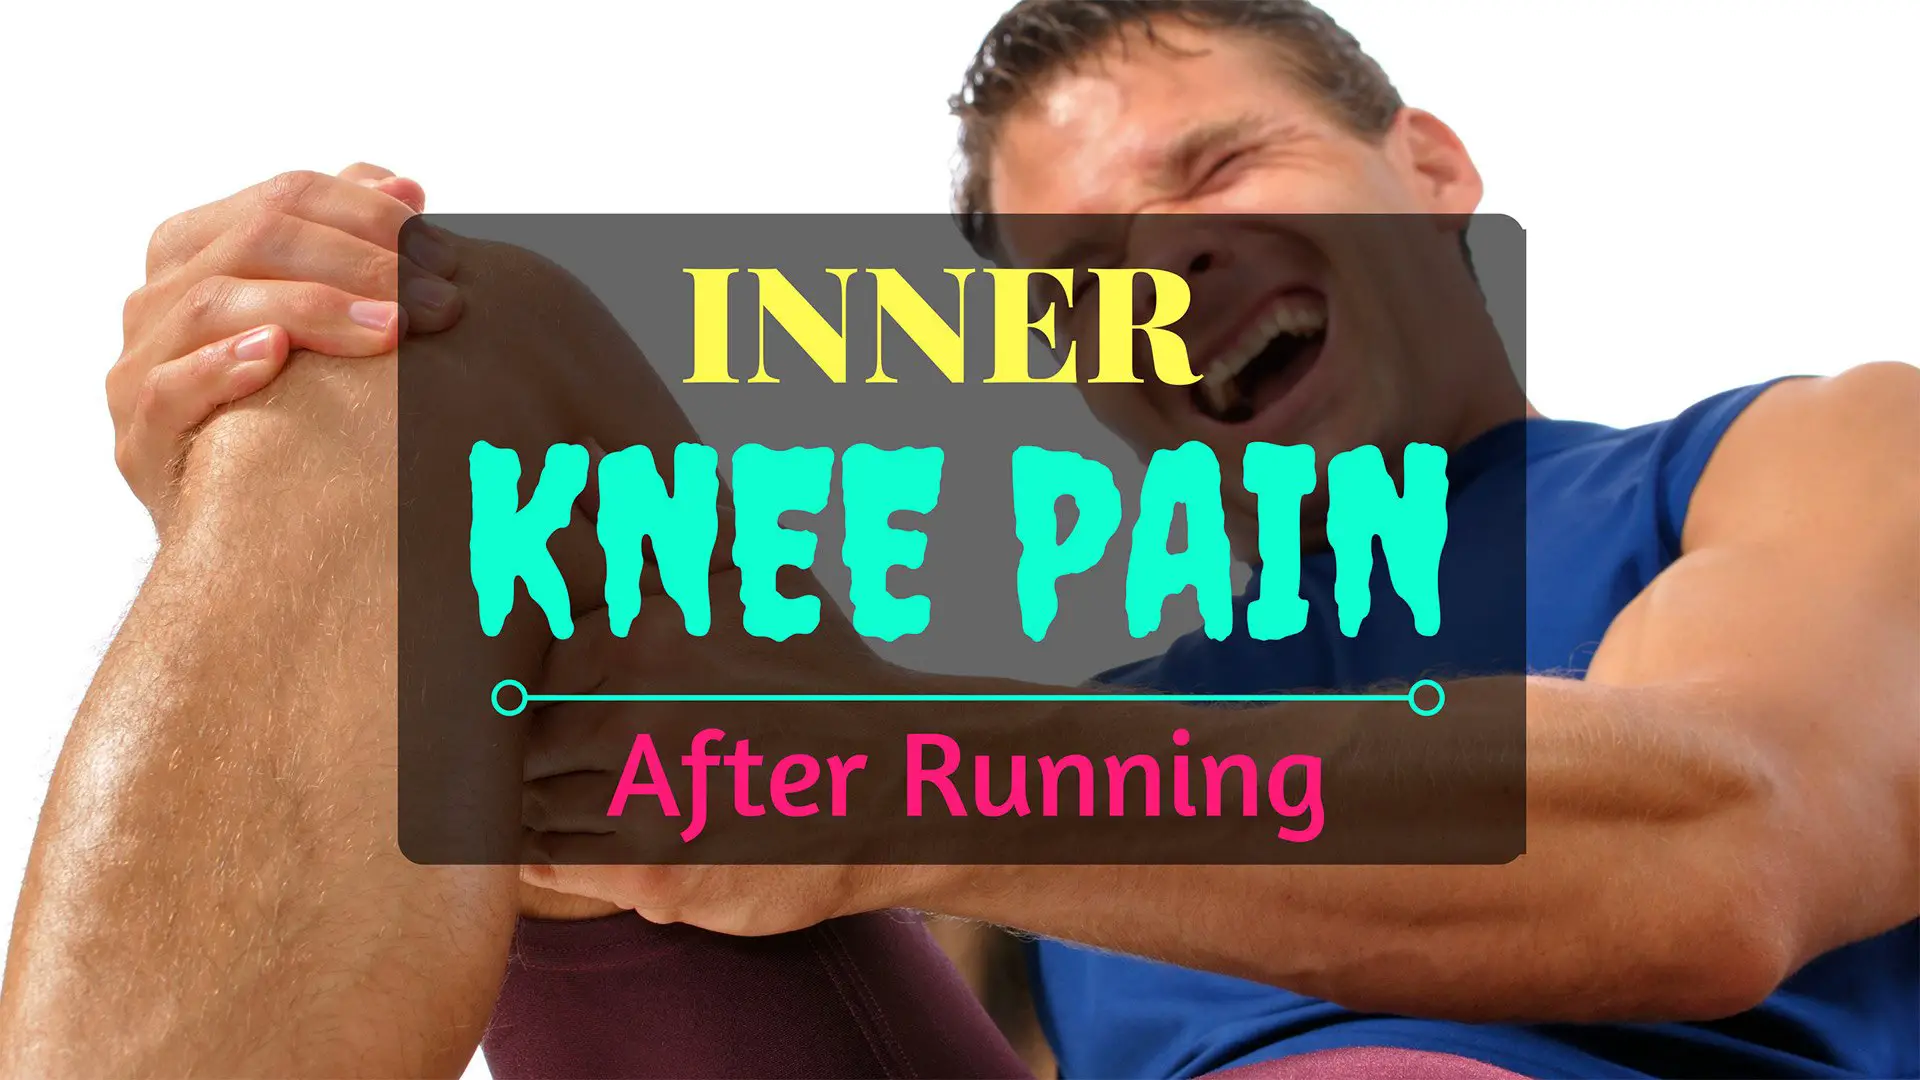 inner knee pain after running